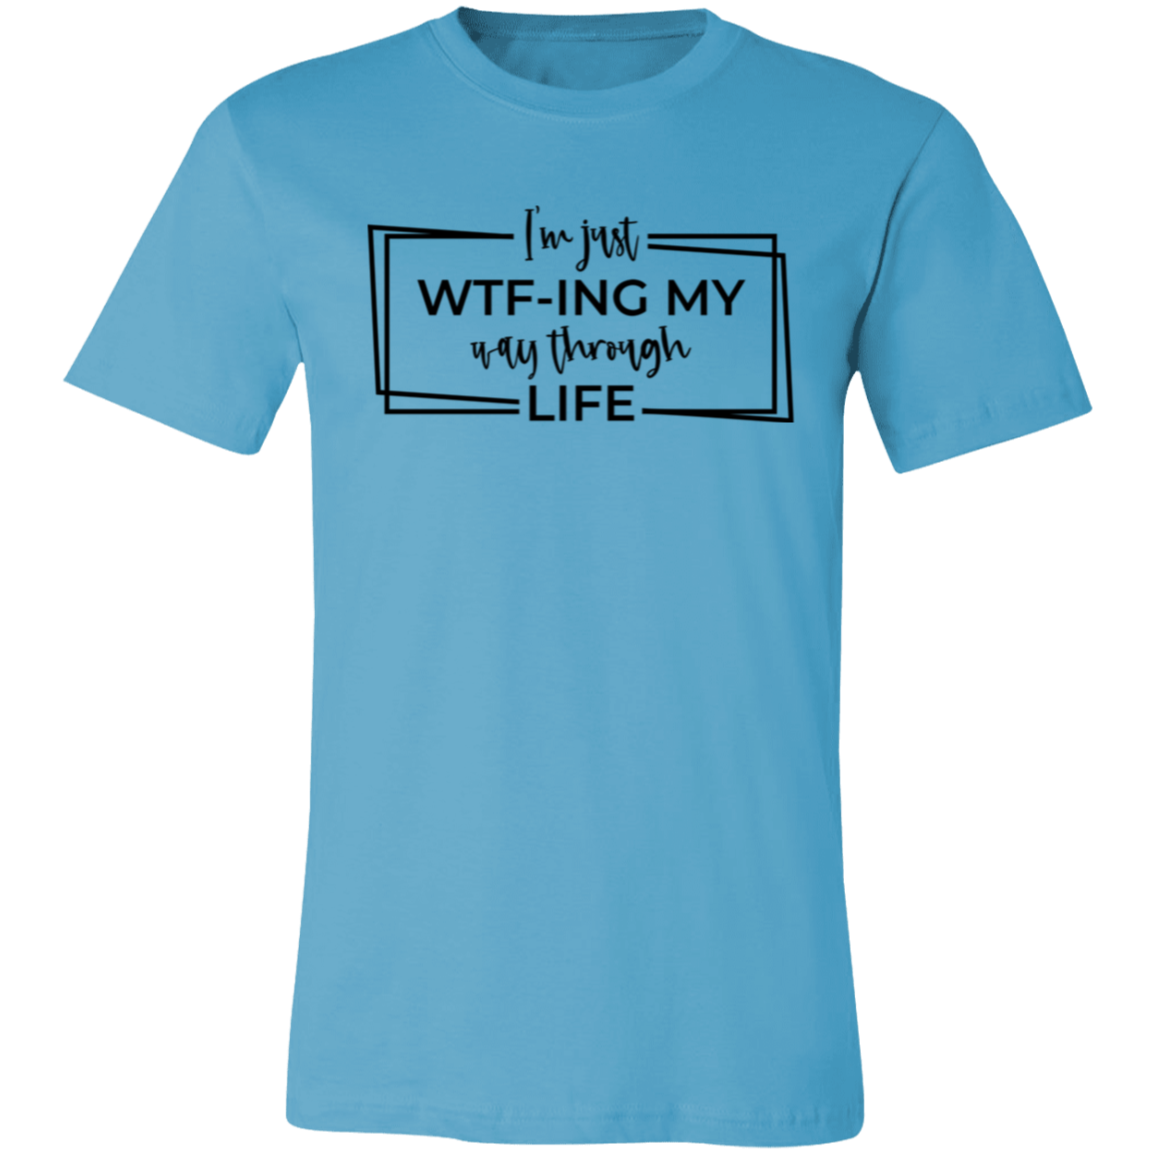 I’M Just Wtf-Ing My Way Through Life 3001C Unisex Jersey Short-Sleeve T-Shirt